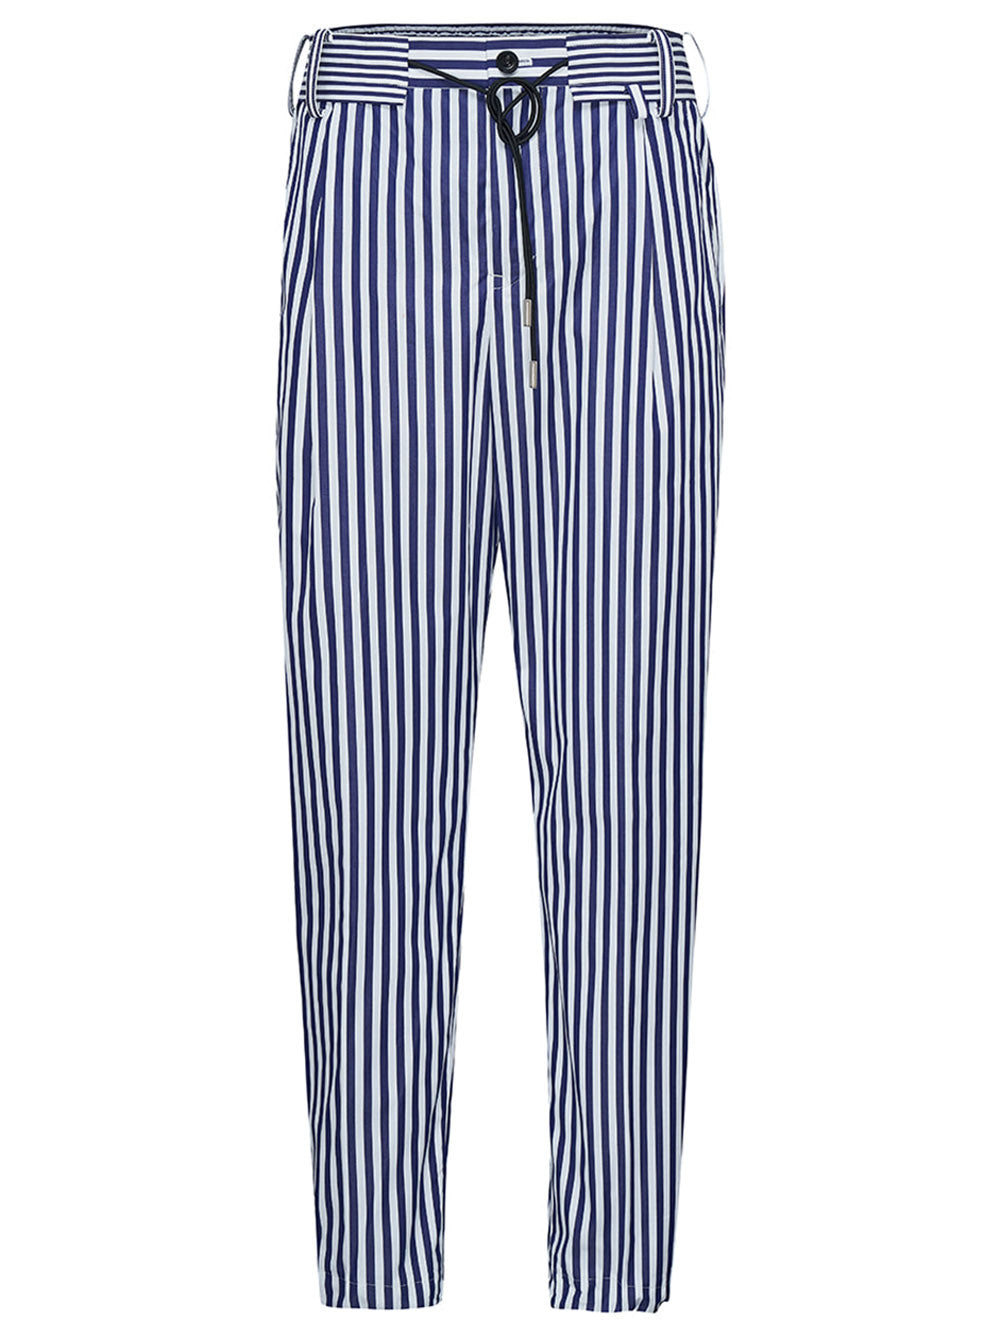     Sacai-Thomas-Mason-Cotton-Poplin-Pants-Stripe-1